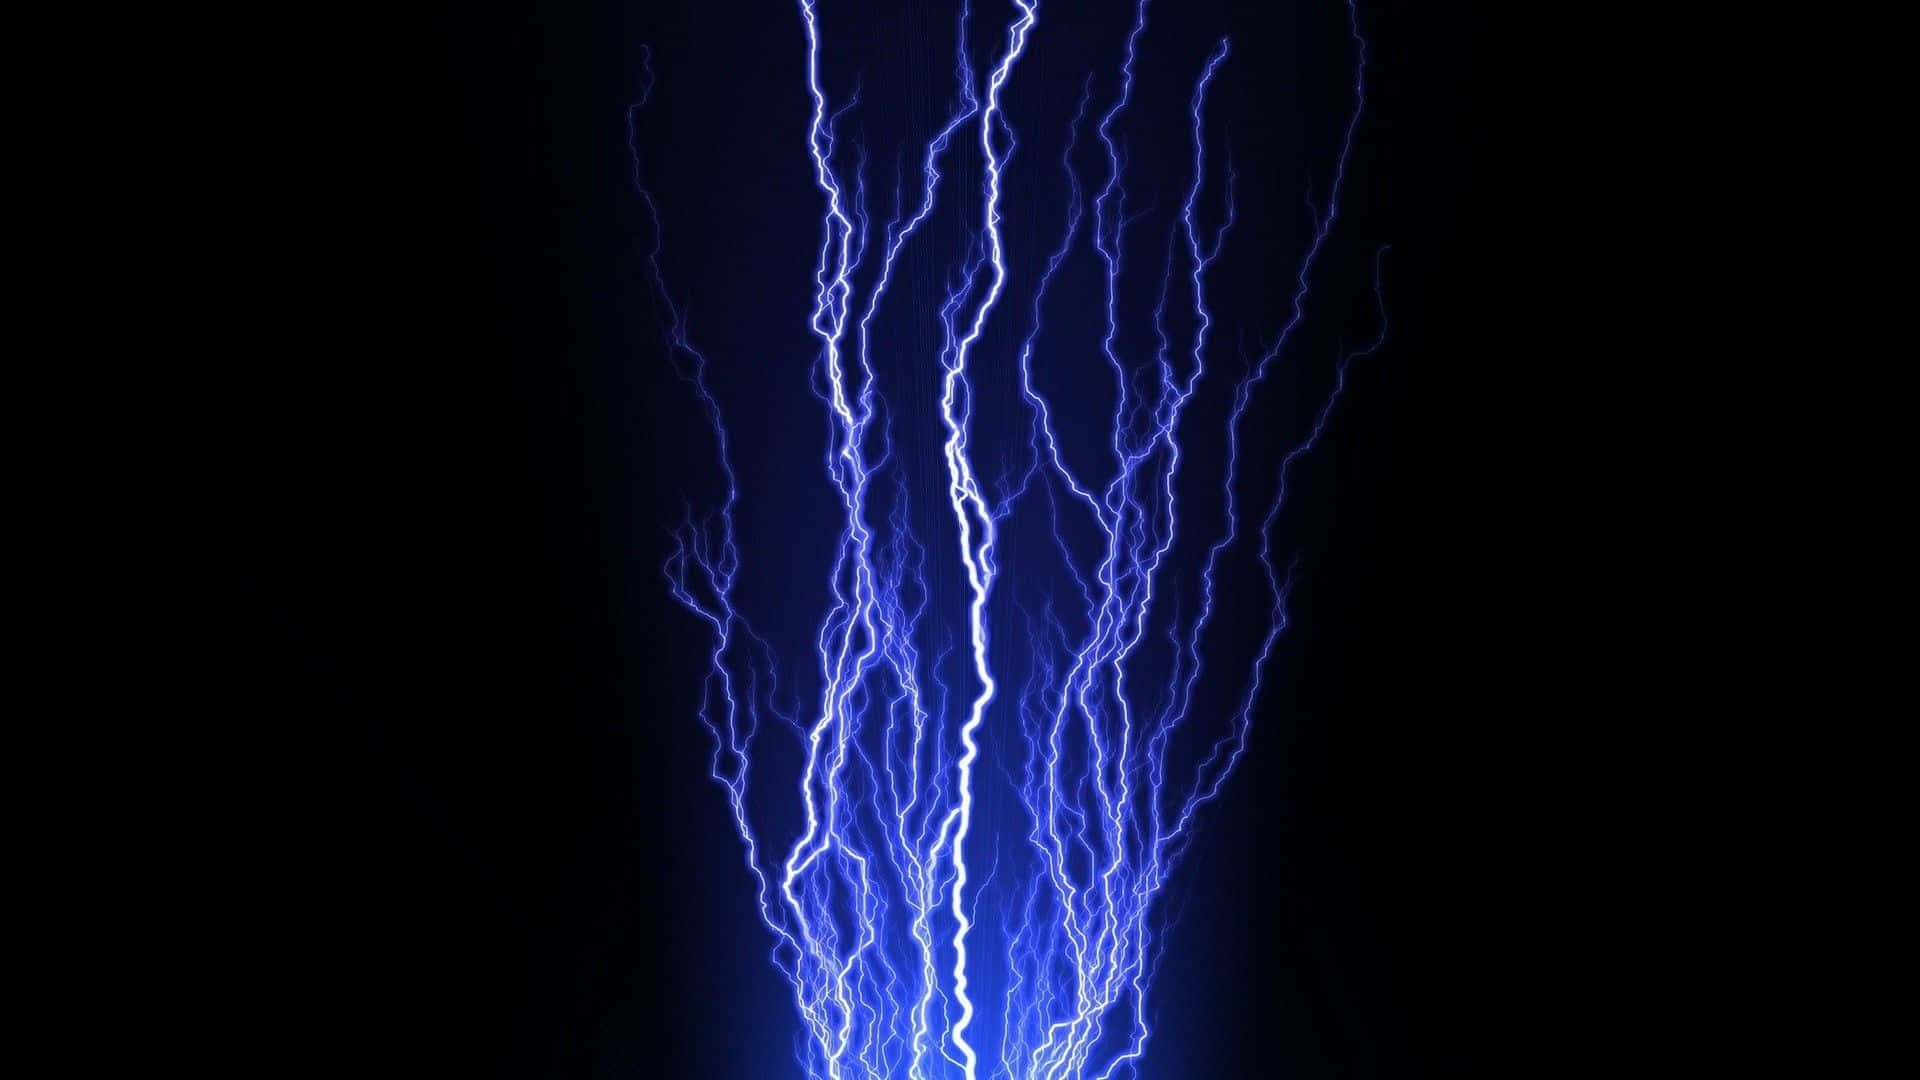 An Electric-blue Streak Of Lightning Pierces A Clear Night Sky Background